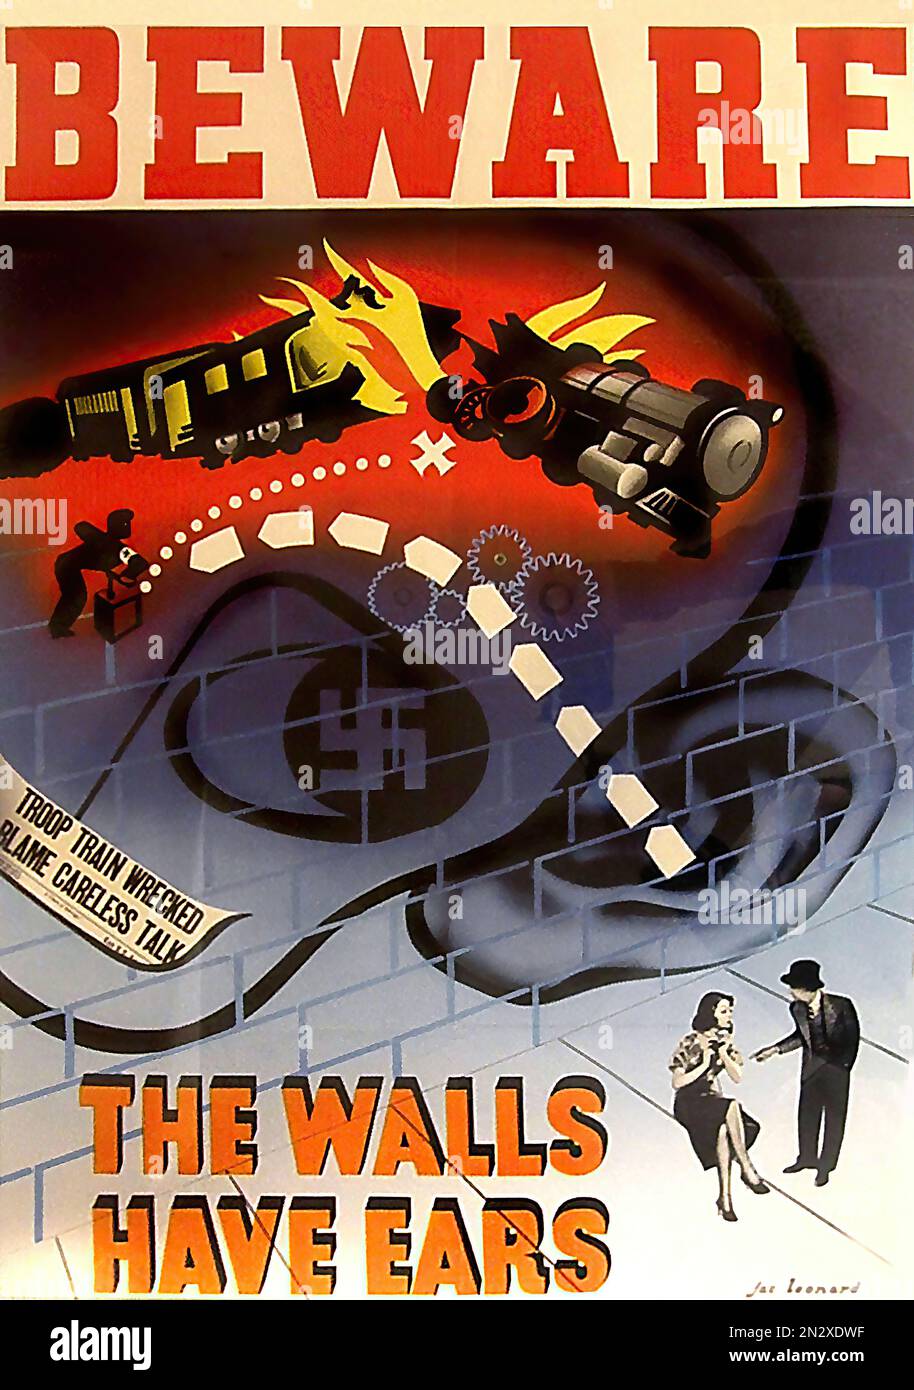 Beware the walls have ears !- World War II - U.S propaganda Poster Stock Photo